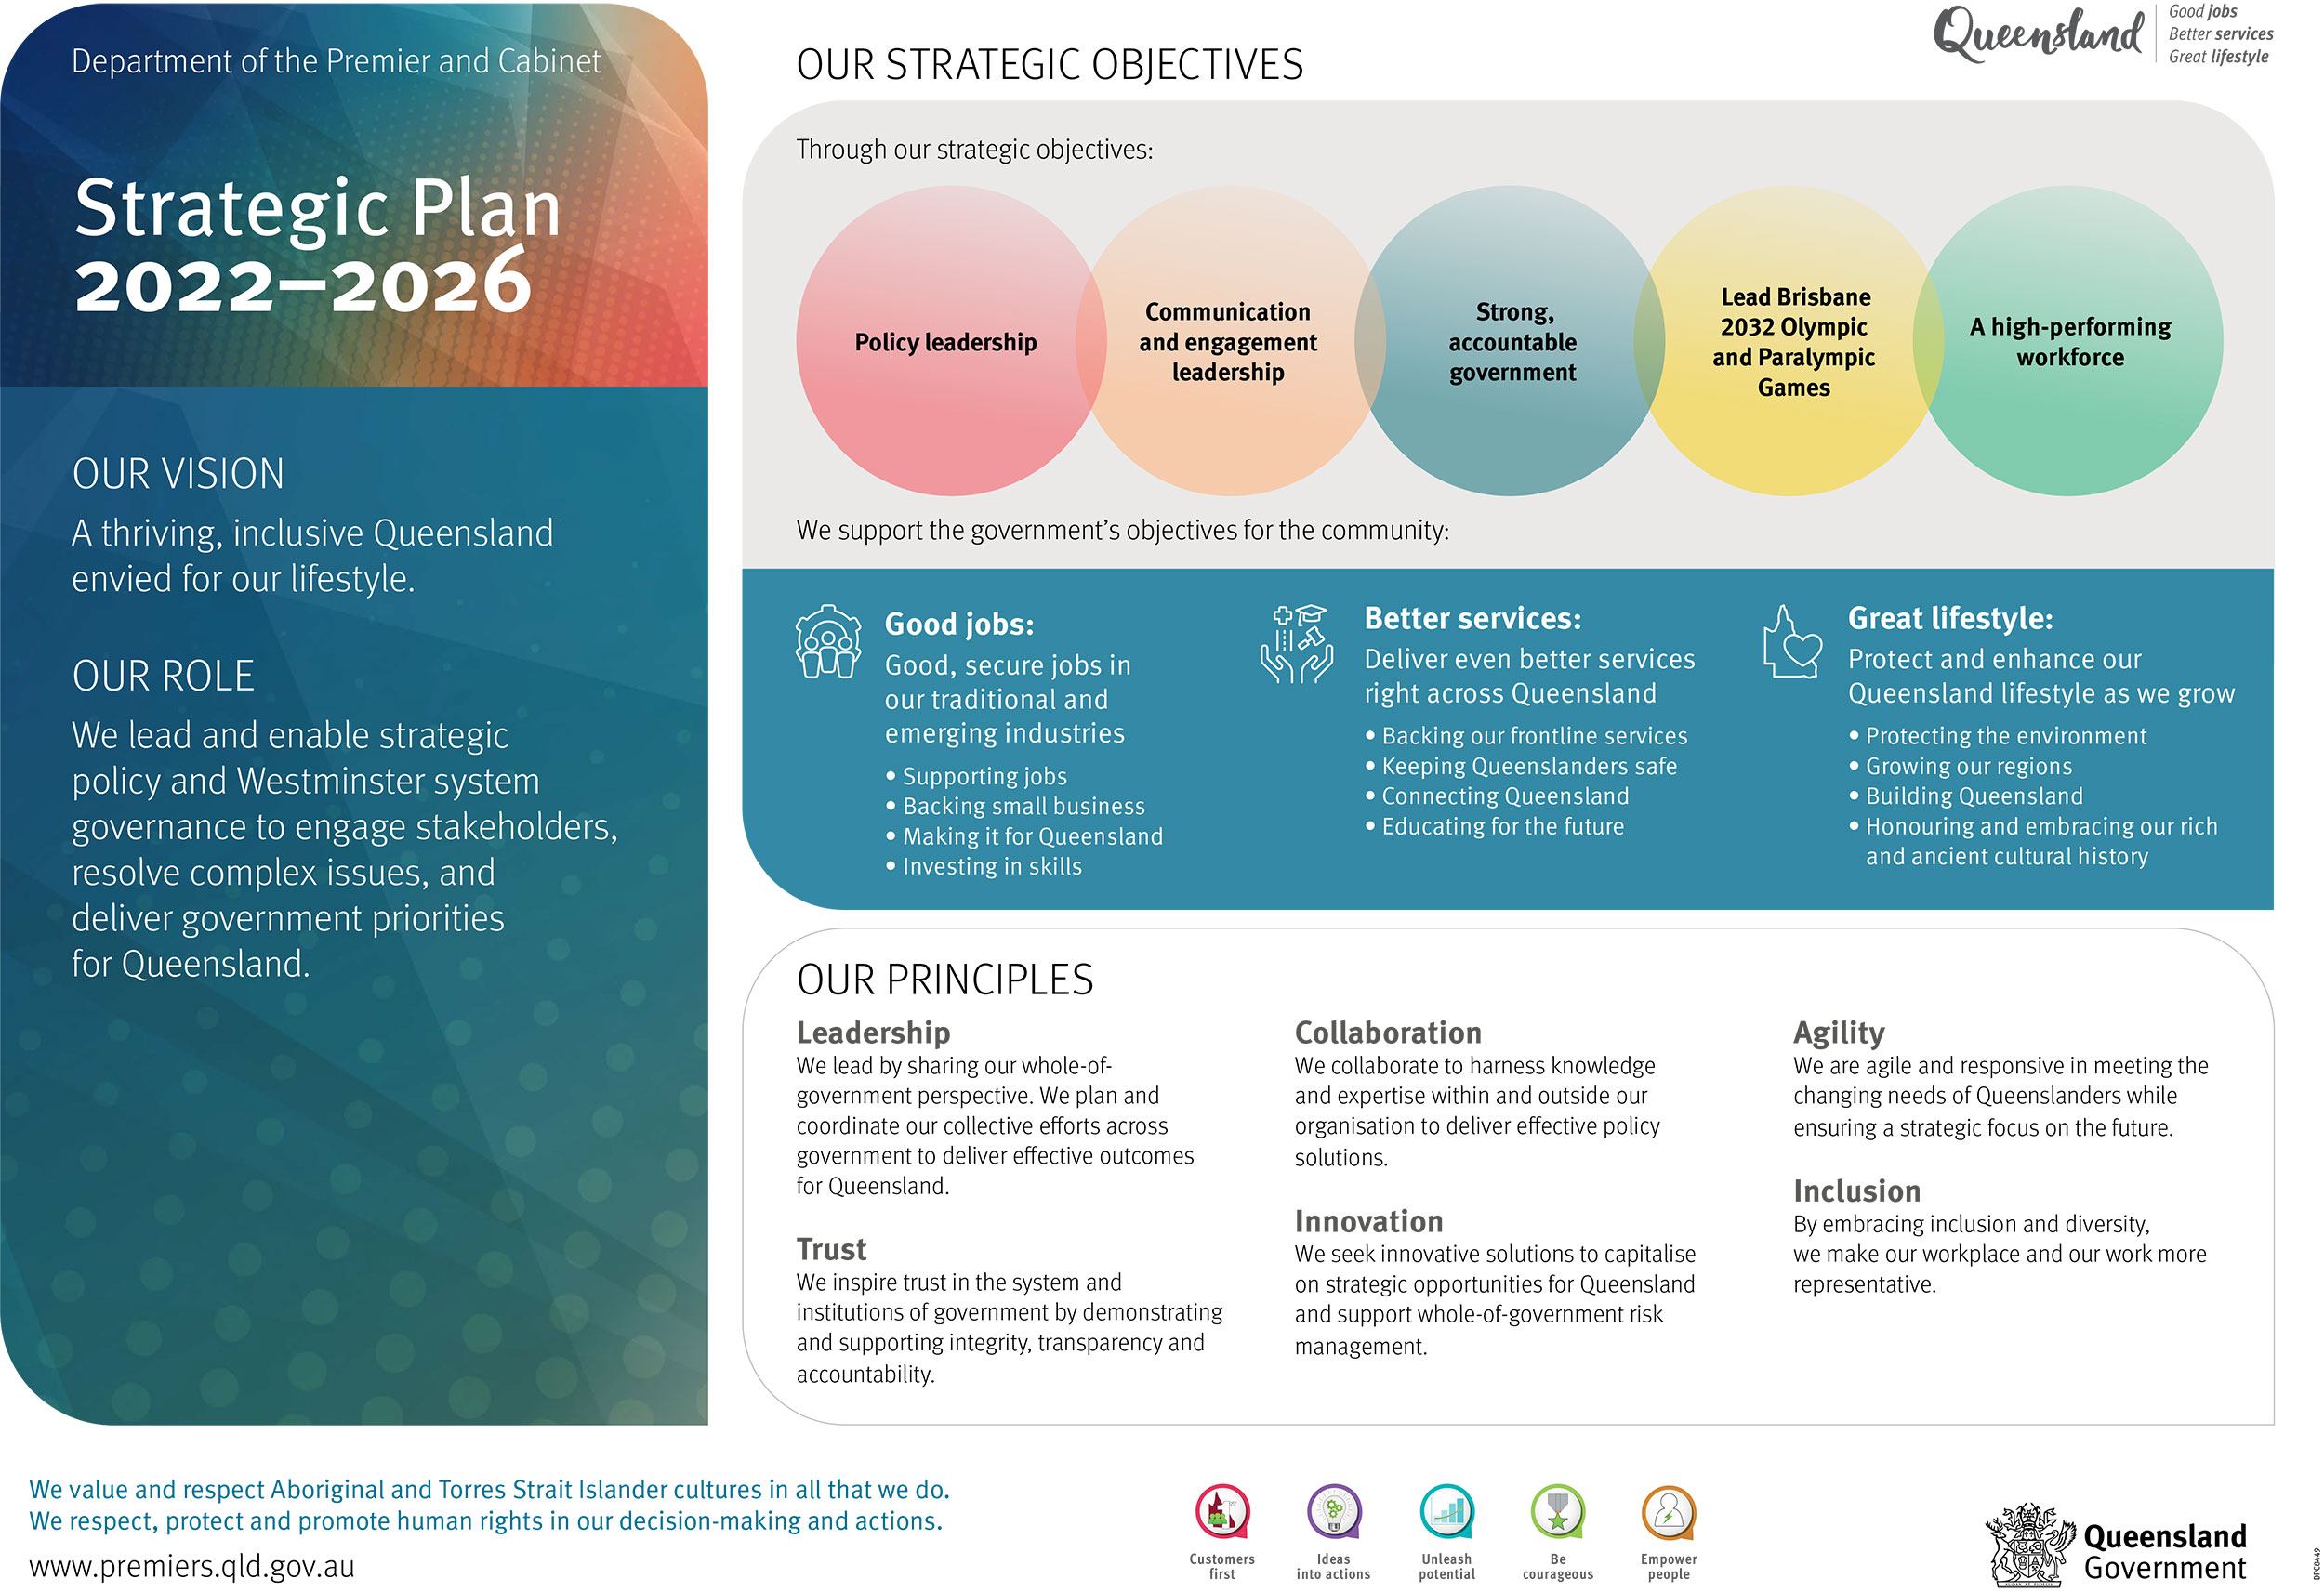 DPC Strategic Plan 2022-2026